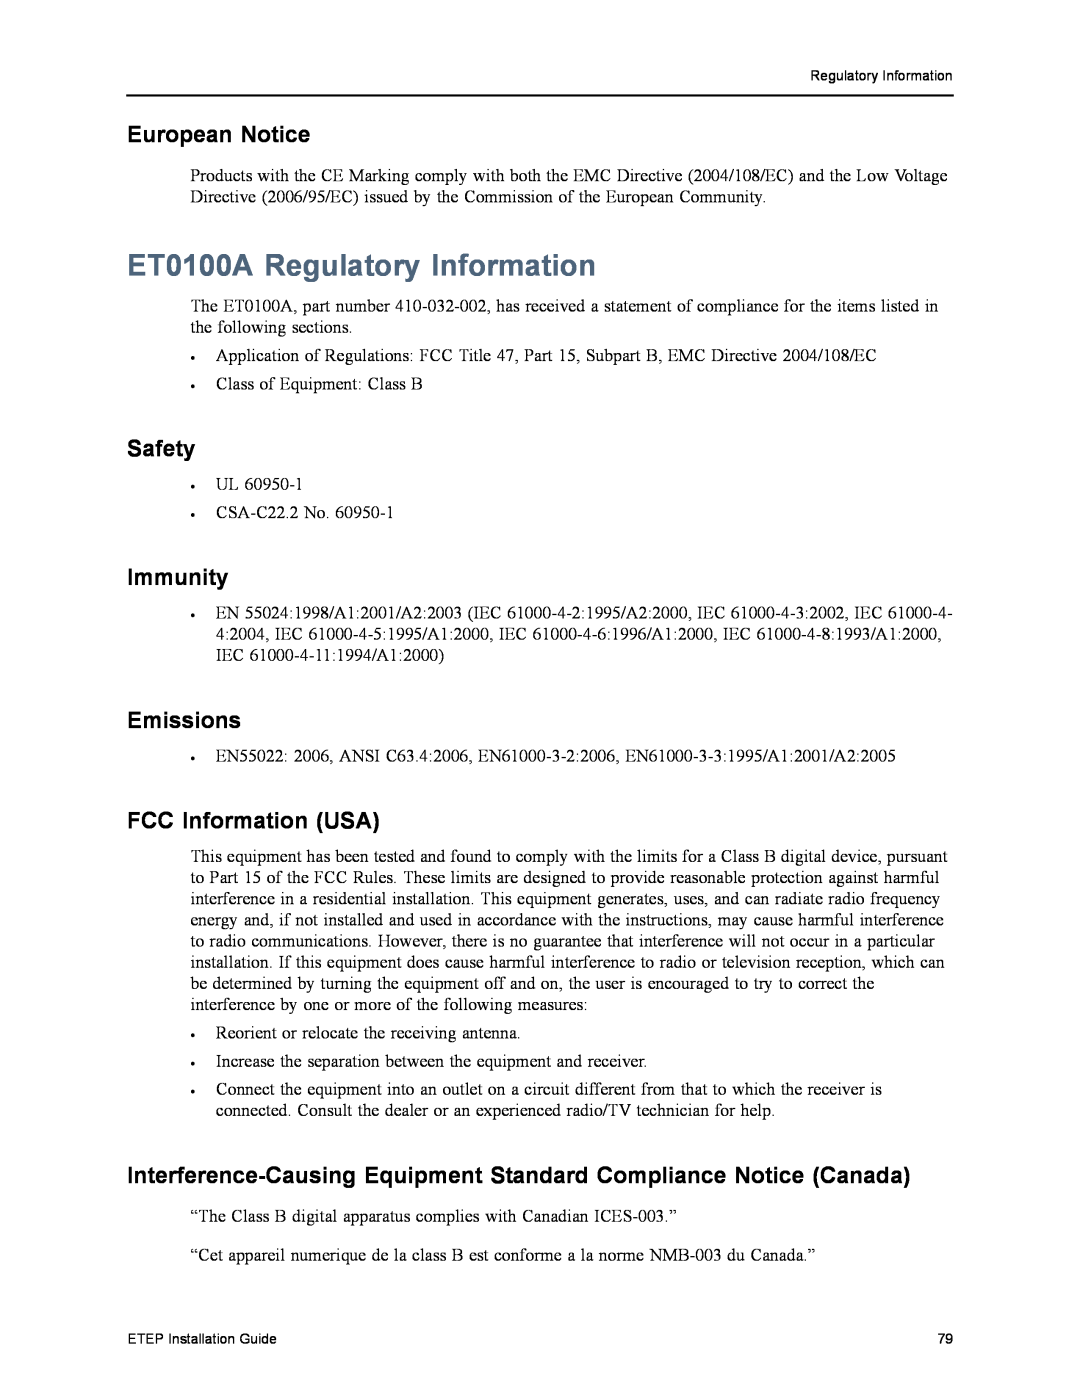 Black Box EncrypTight Enforcement Point (ETEP), ET1000A ET0100A Regulatory Information, European Notice, Safety, Immunity 